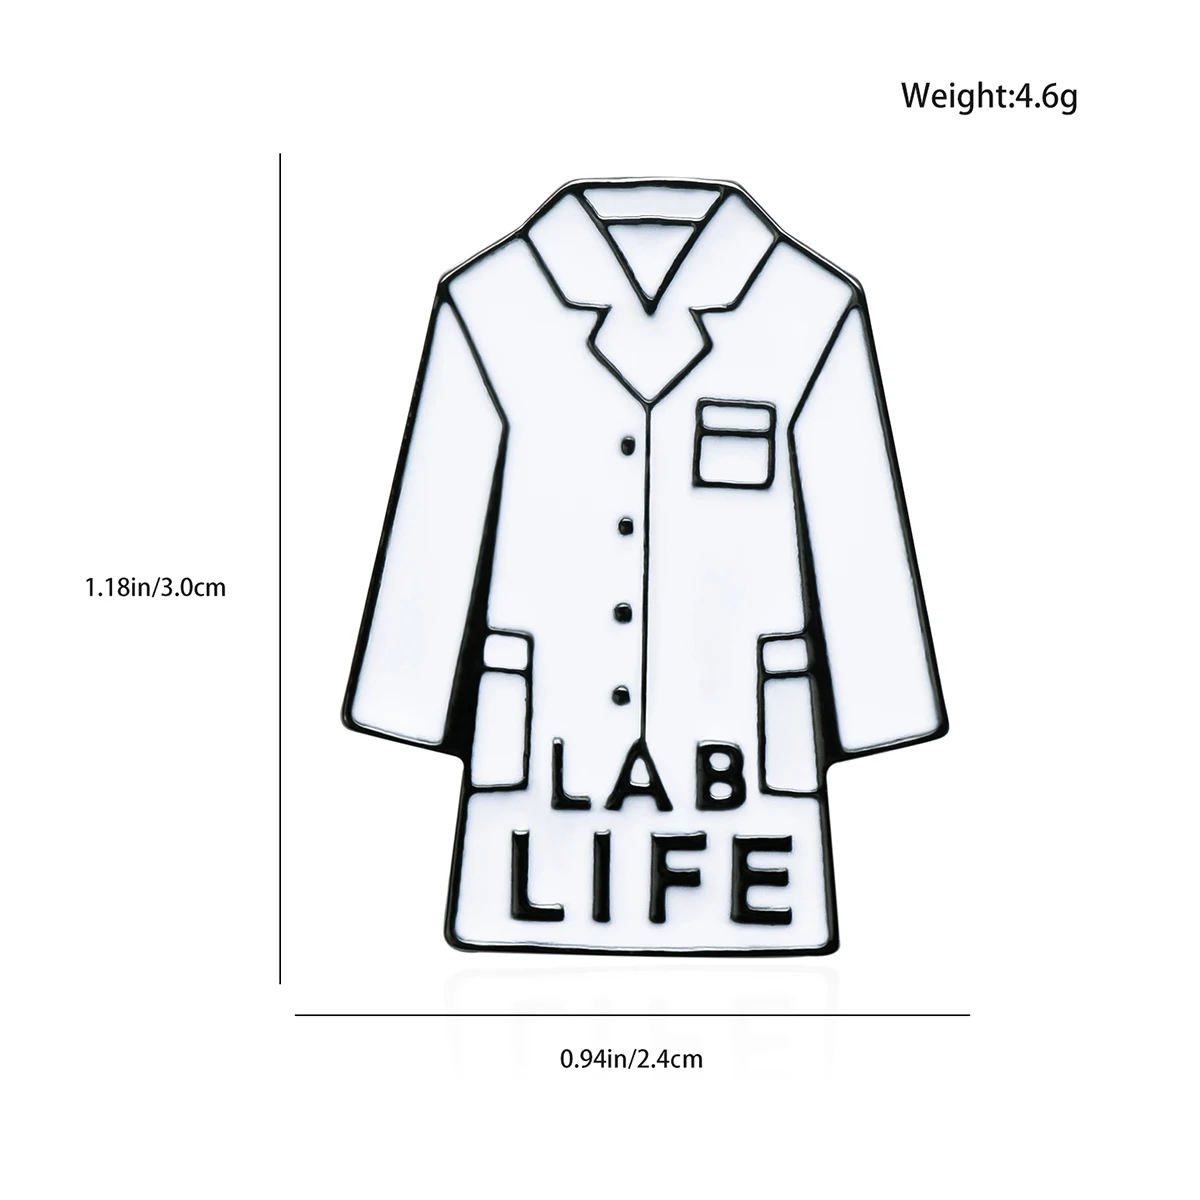 Medsor Lab Life Enamel Pin Exquisite Science Chemical Brooch Collar Coat Lanyard Lapel Badge For Chemist Graduate Gift